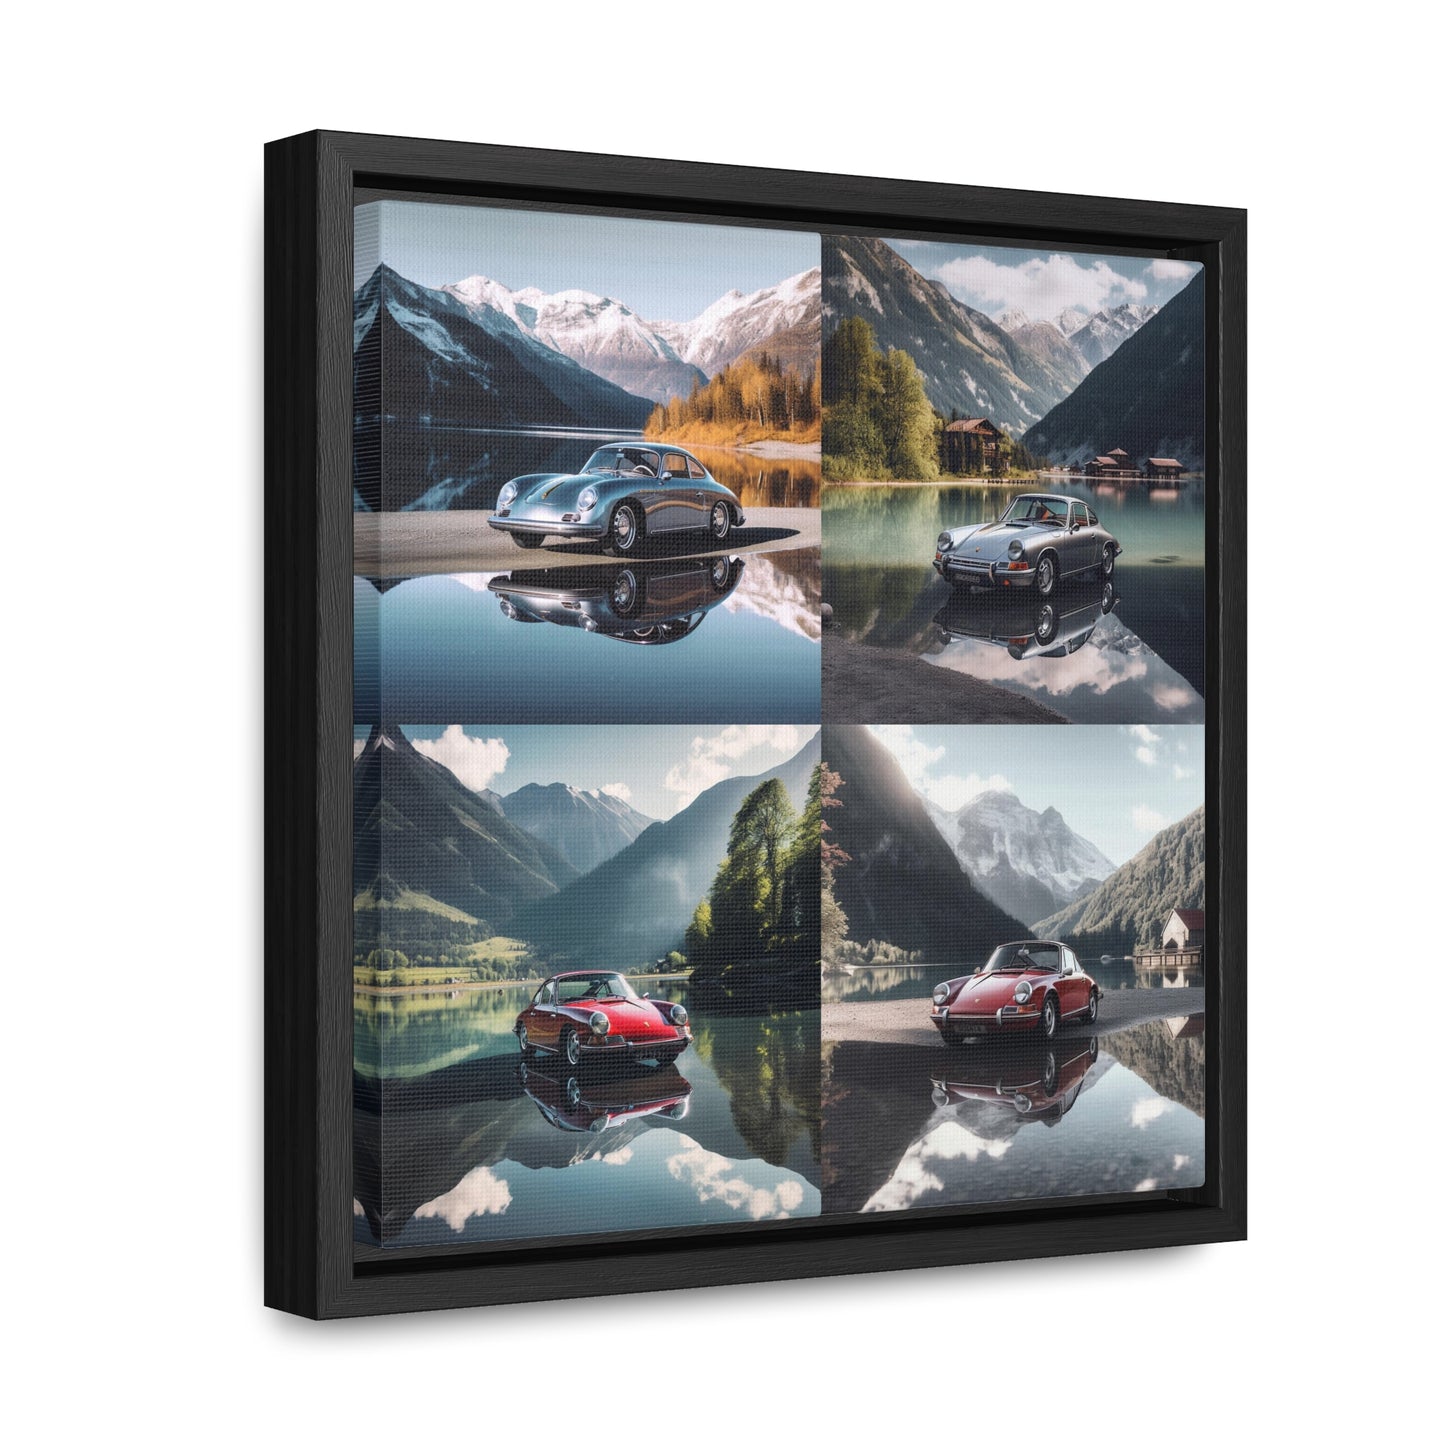 Gallery Canvas Wraps, Square Frame Porsche Lake 5